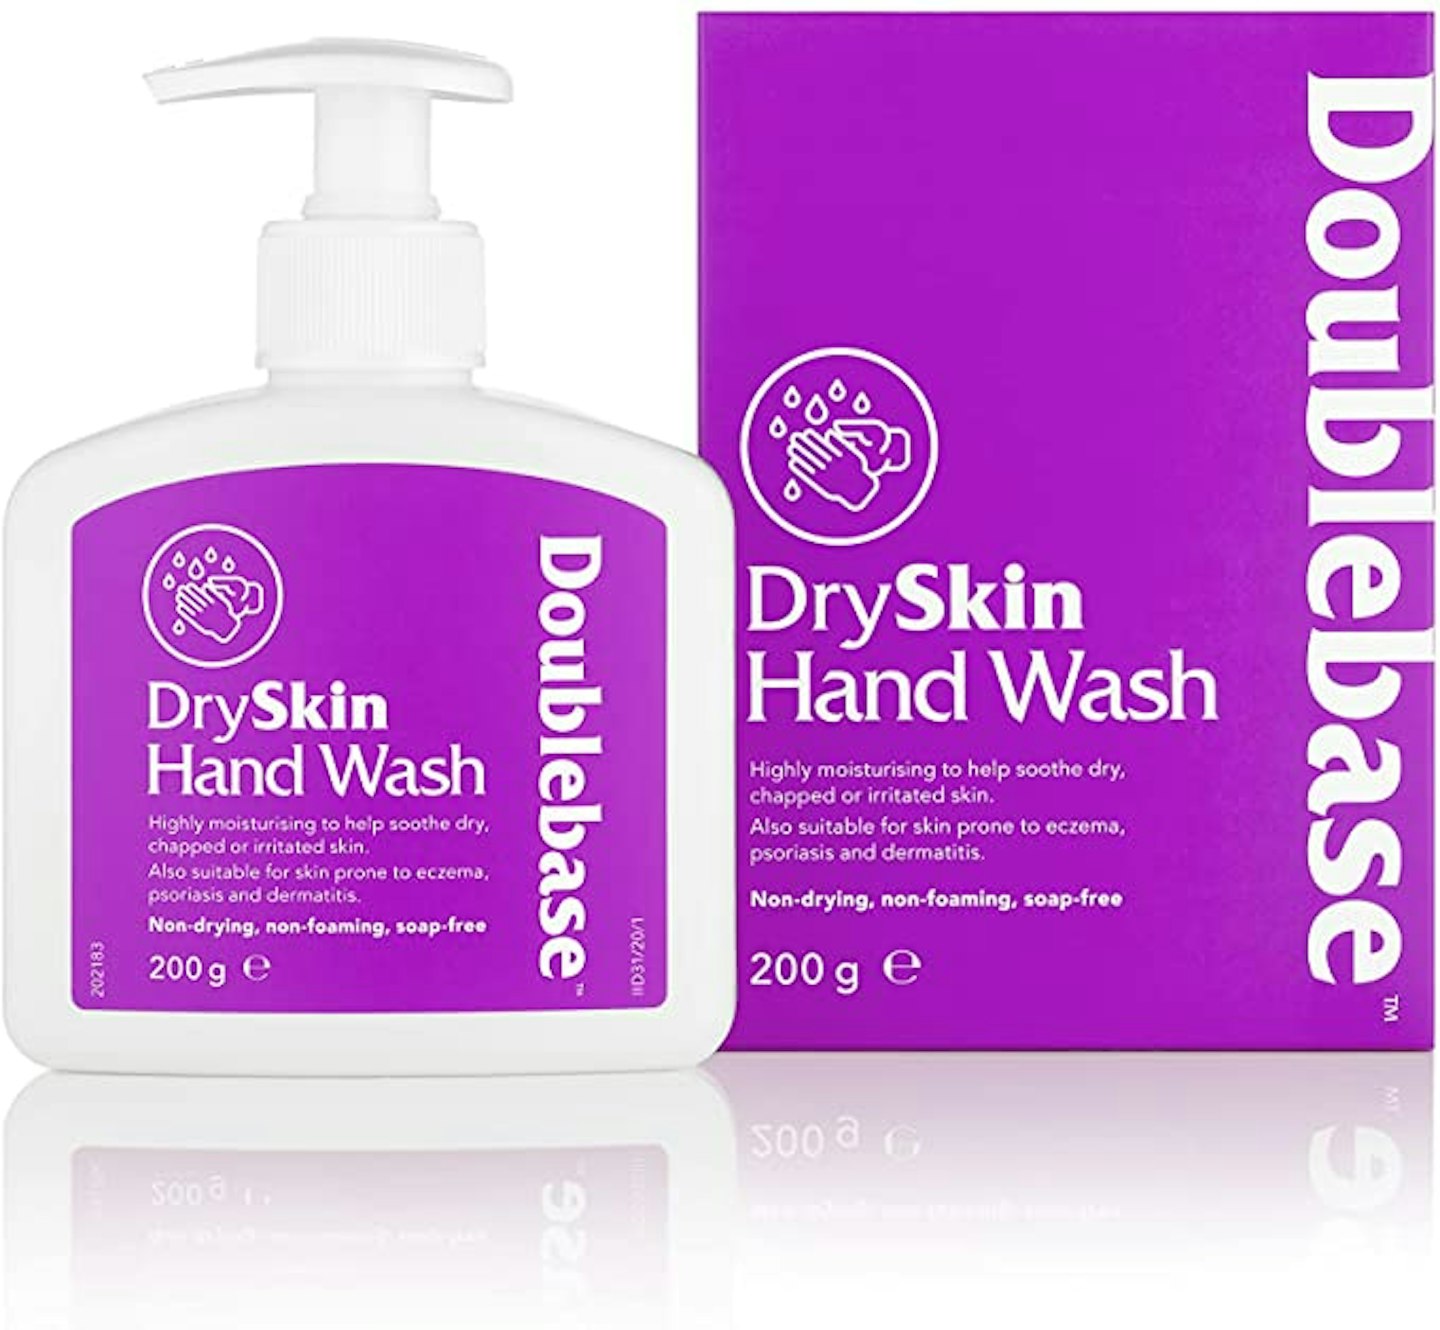 Doublebase Dry Skin Hand Wash